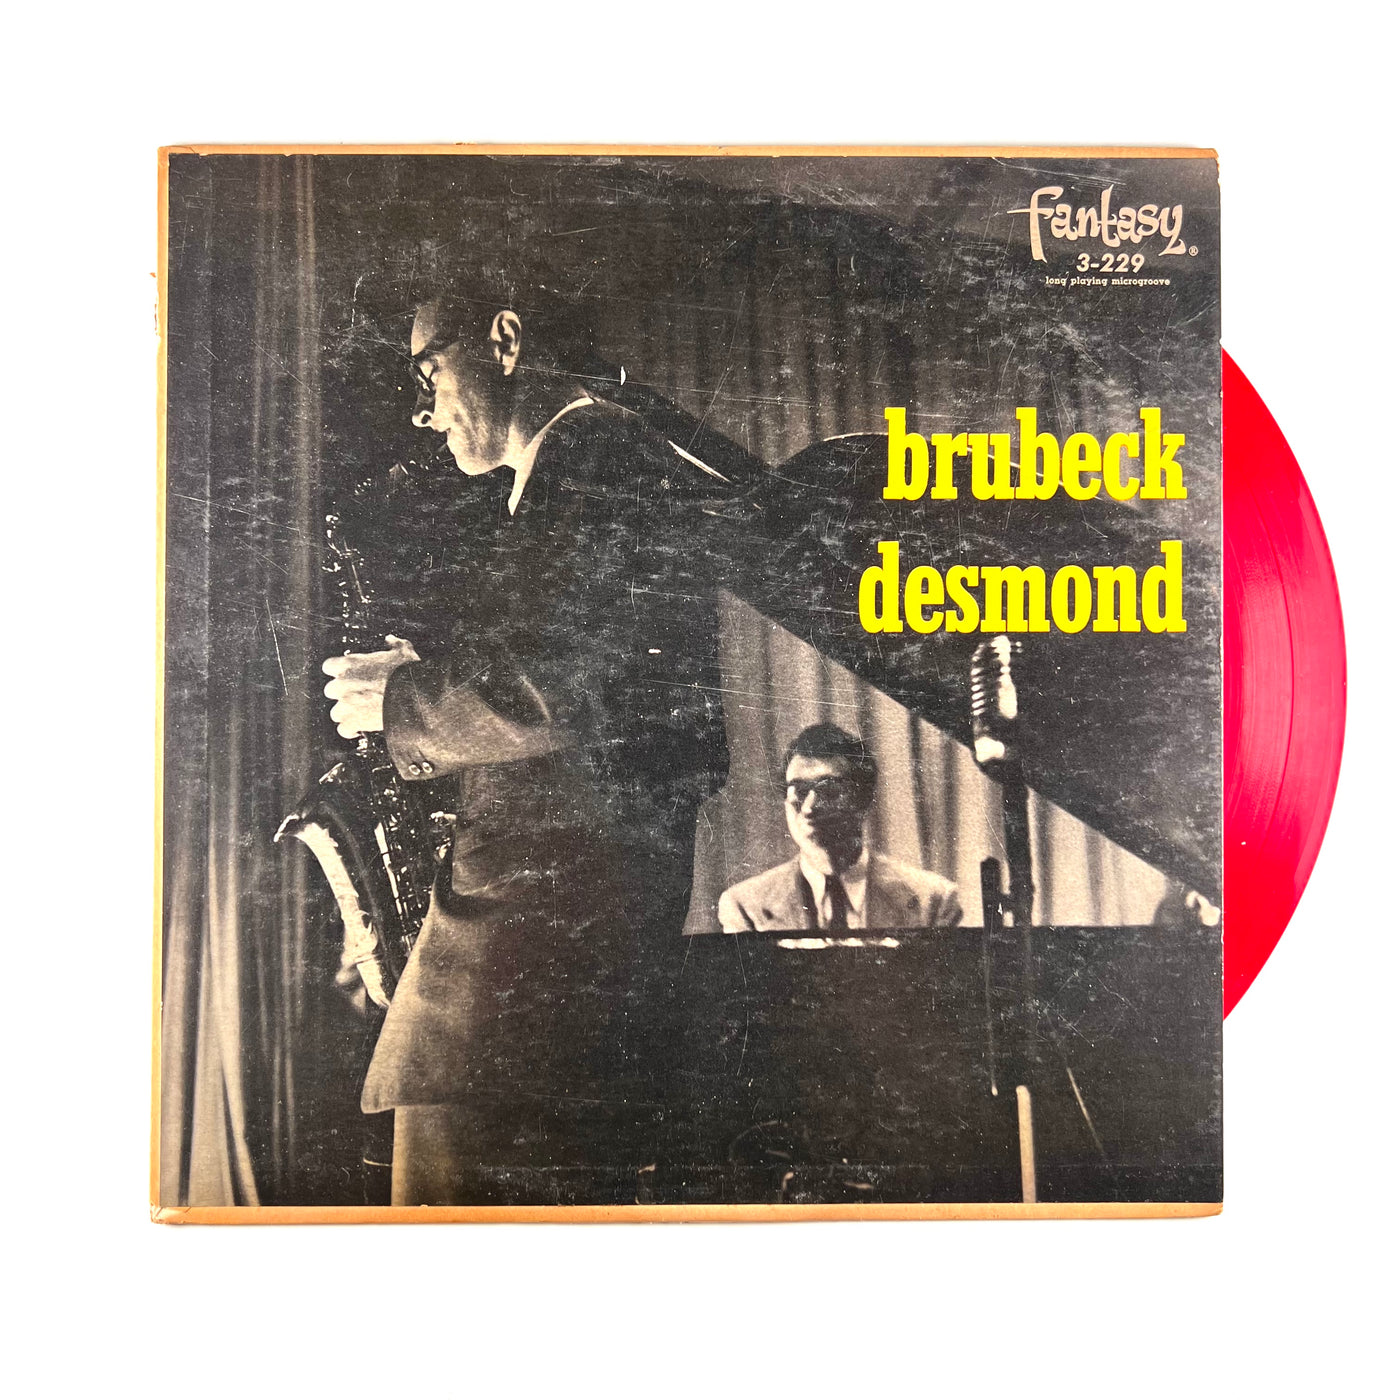 The Dave Brubeck Quartet Featuring Paul Desmond - Brubeck Desmond